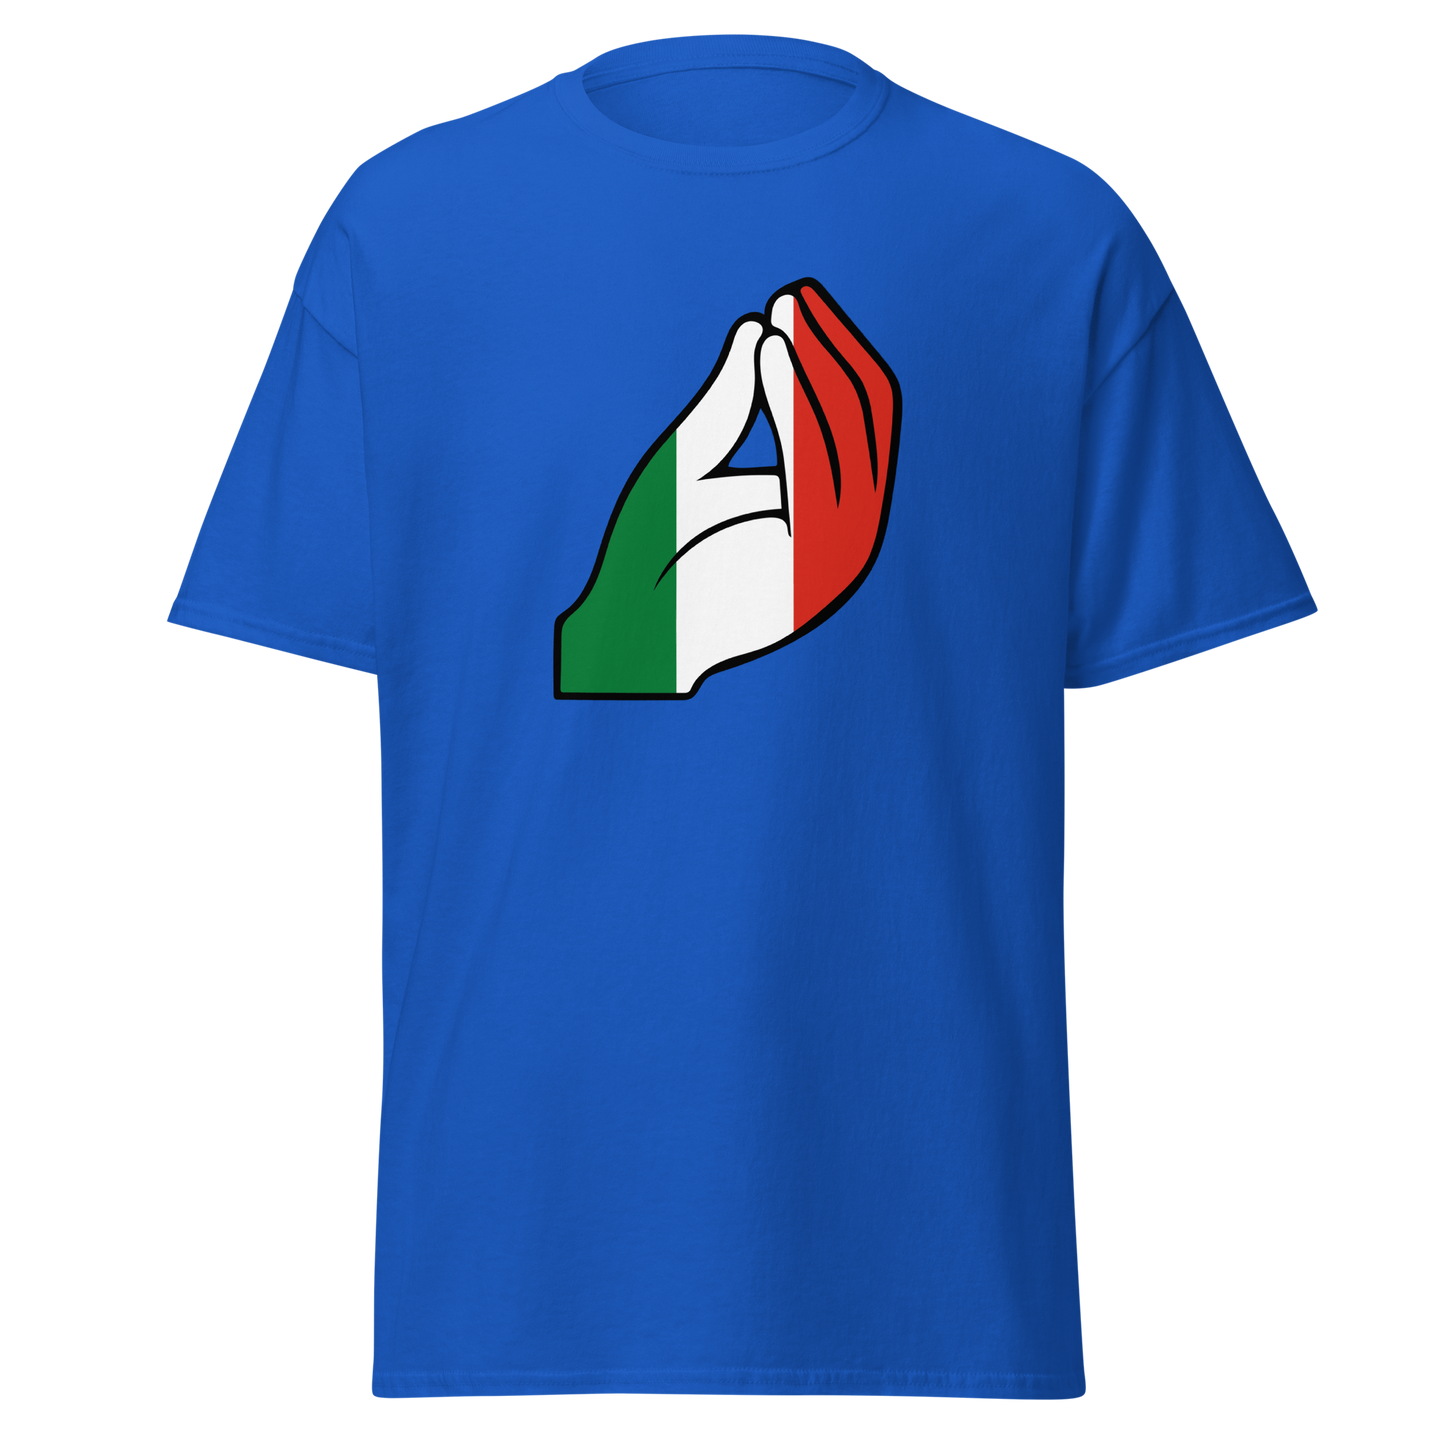 Italian Capiche Hand T-Shirt: Symbolic Italian Gesture- Vintage Tee for Italians